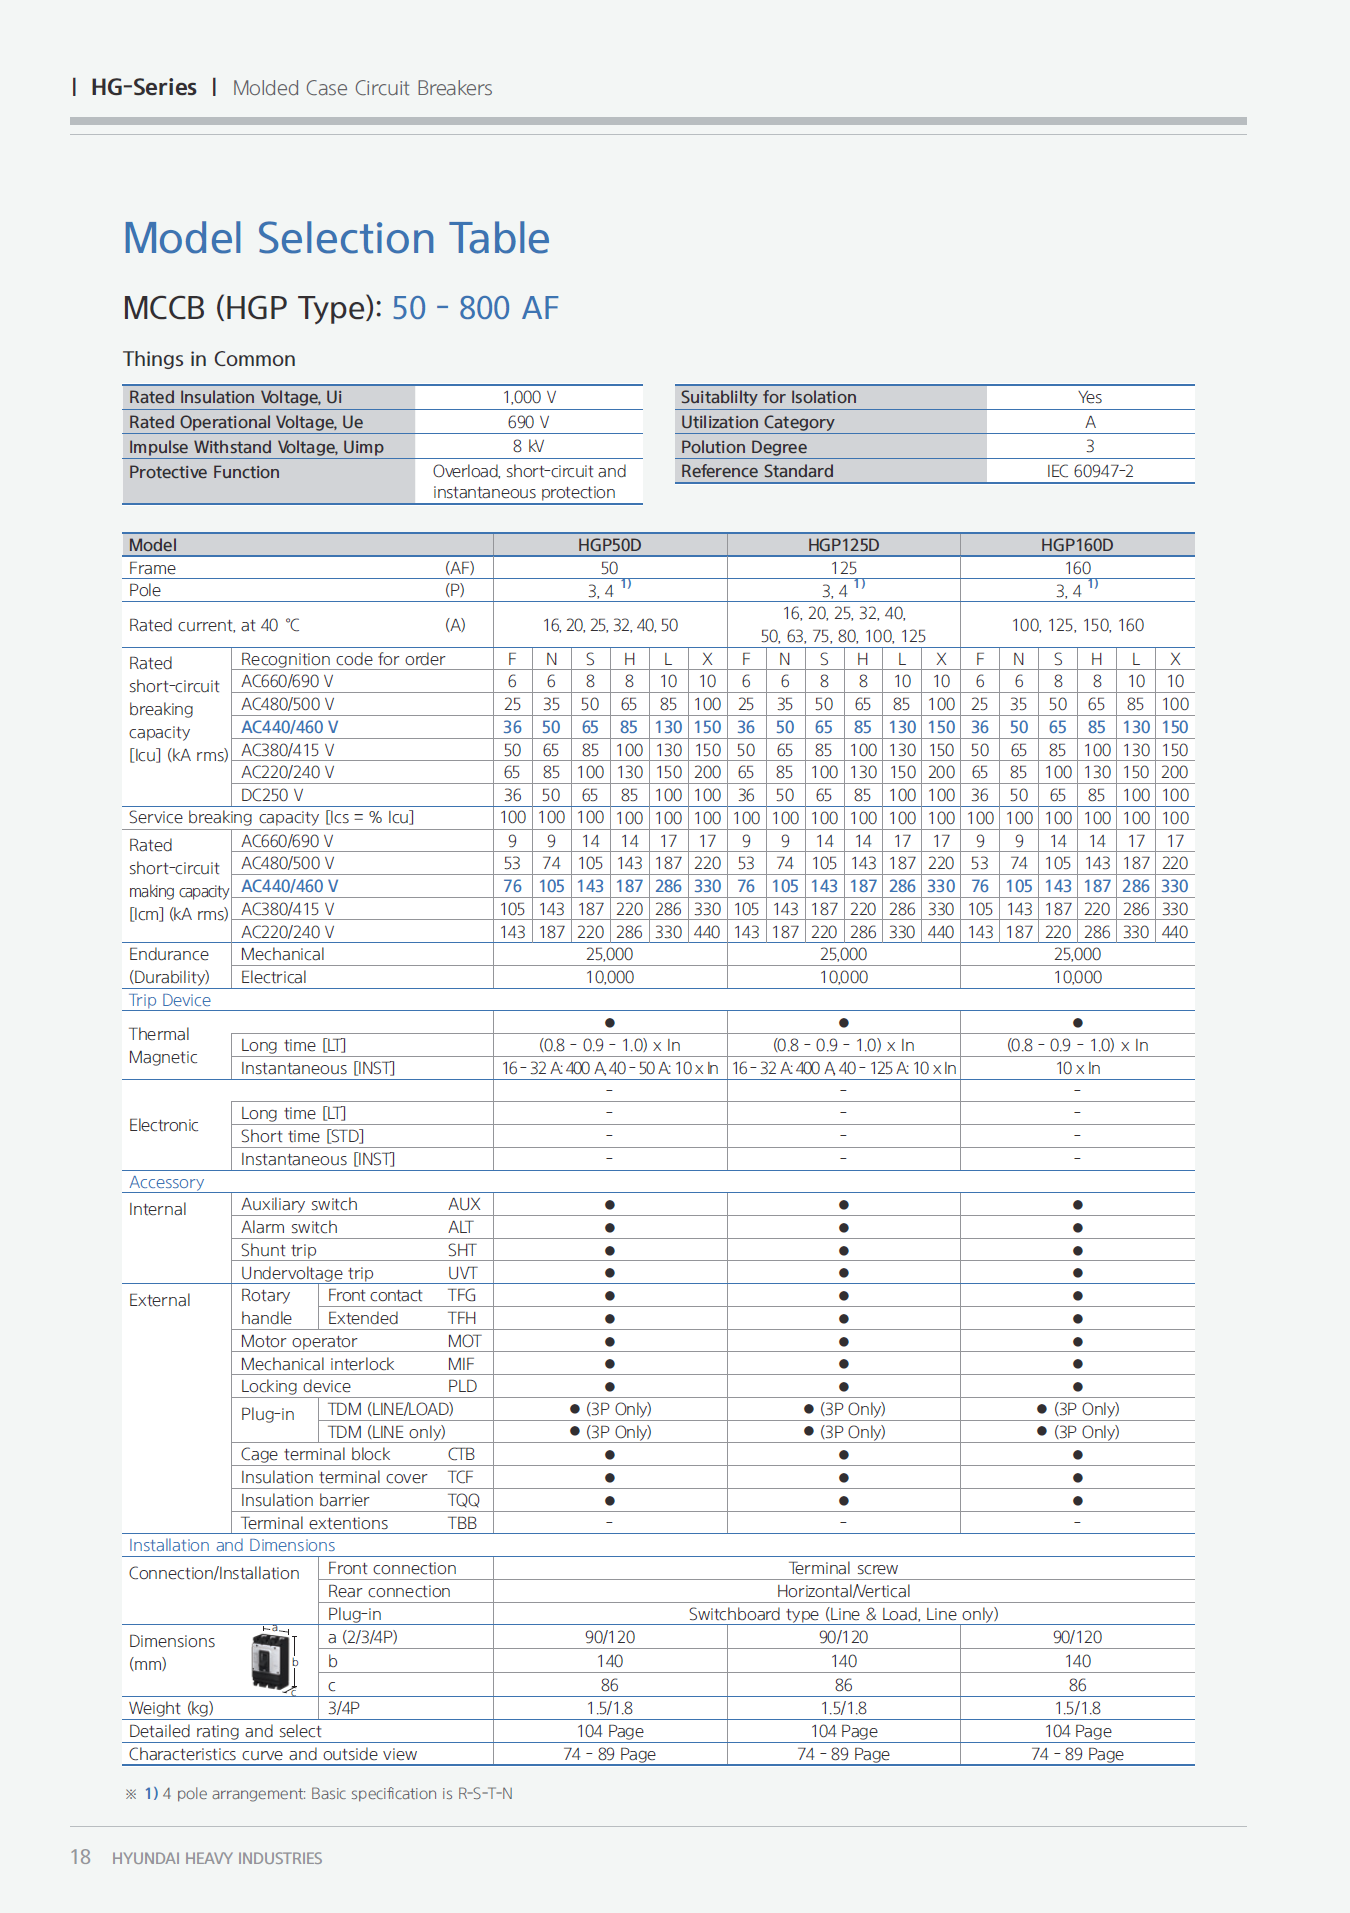 Hyundai Marine Circuit Breaker (MCCB) - HGP125DF 3P Fixed / Plug-in Type